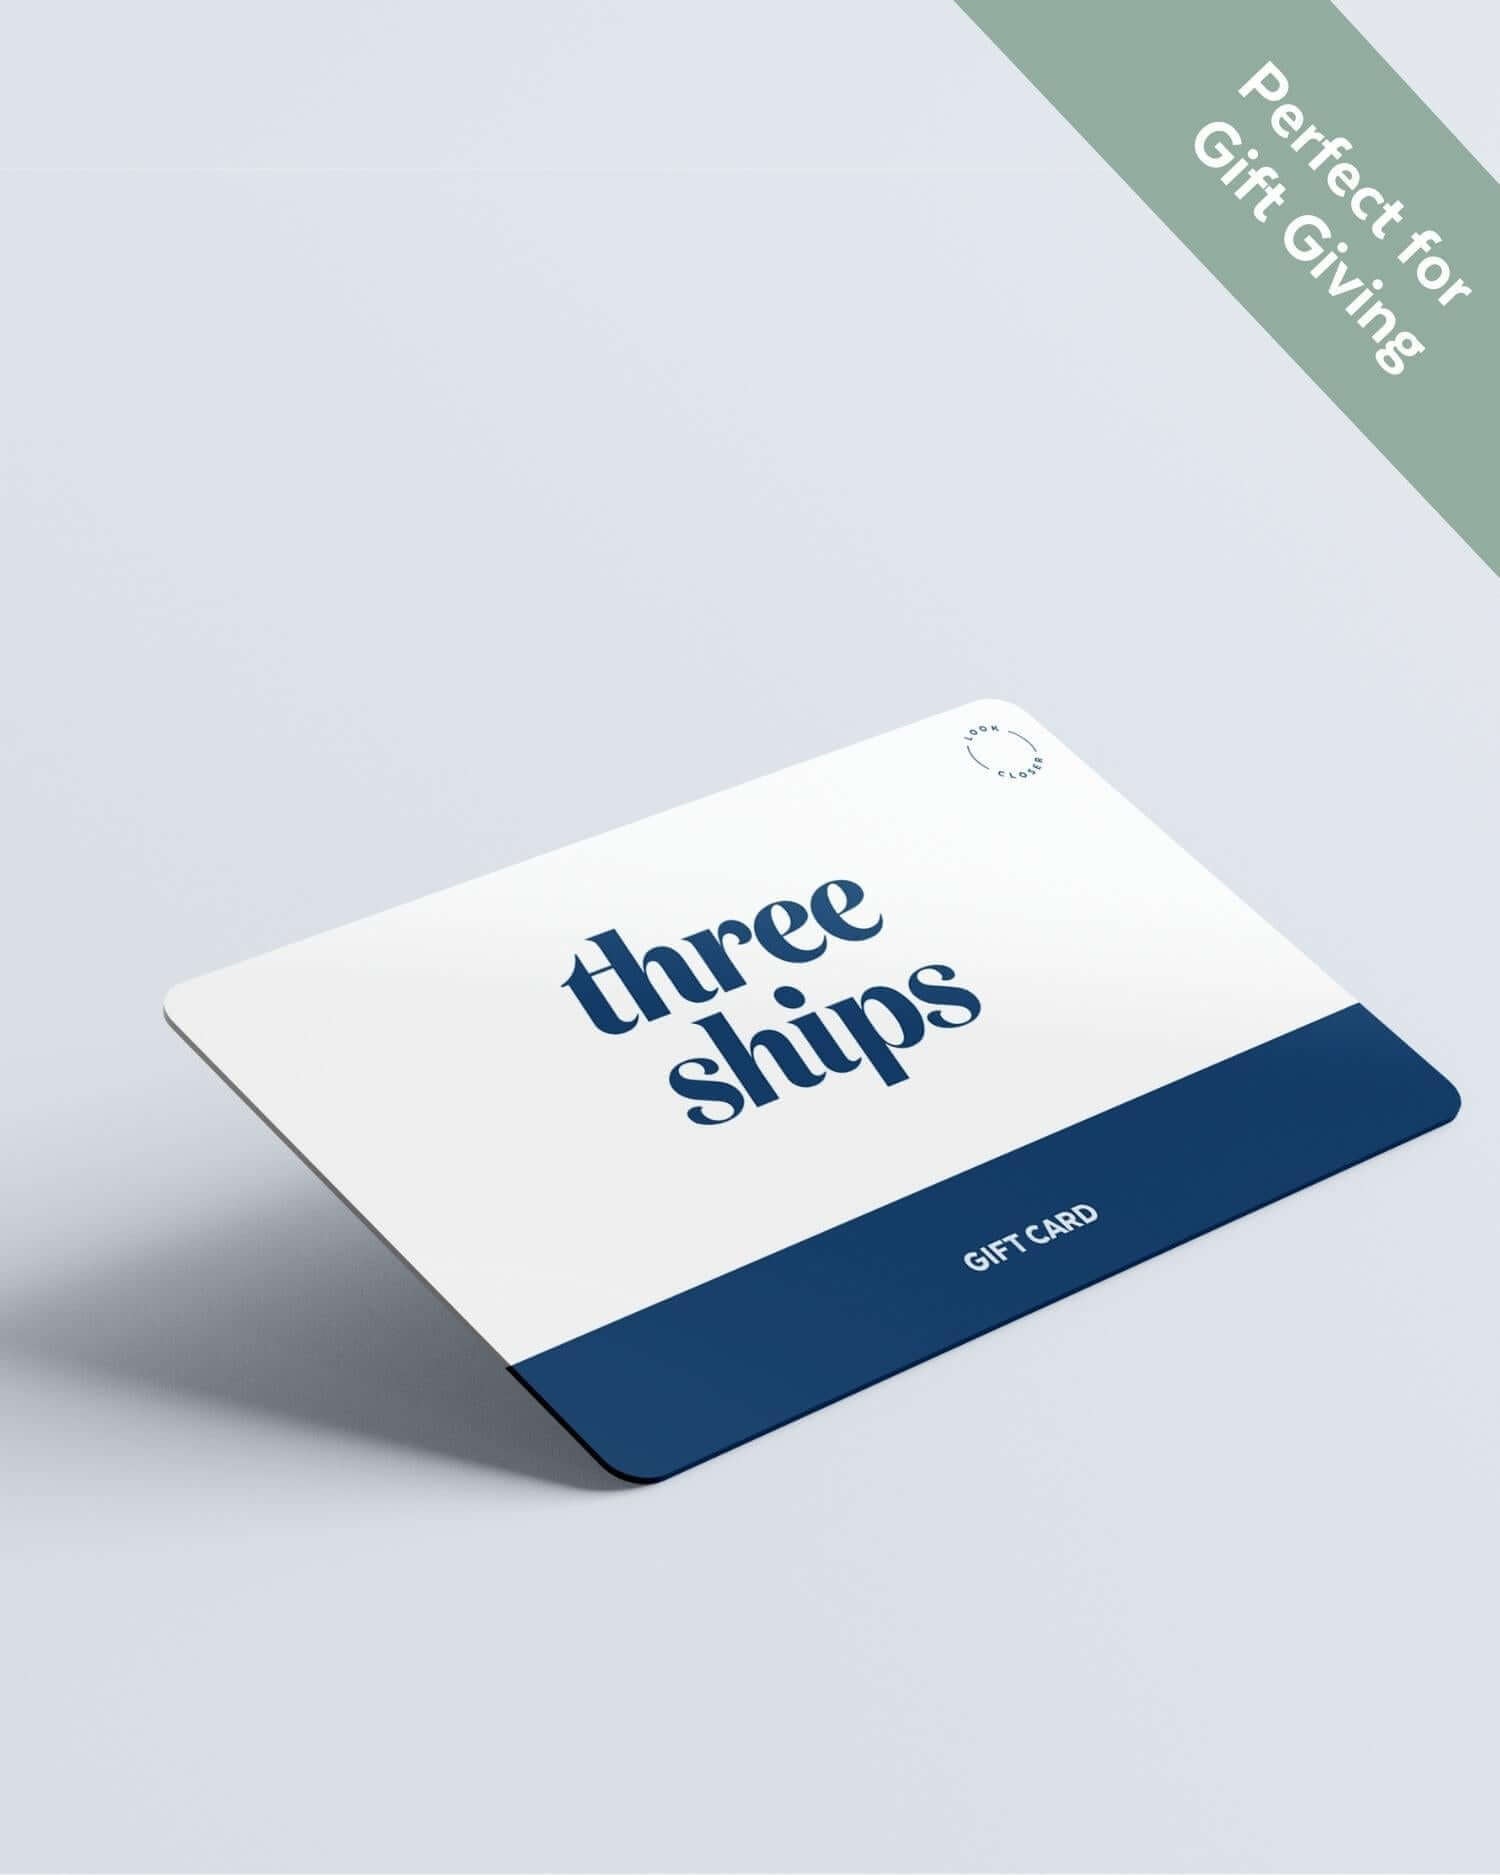 Three Ships E-Gift Card CA$25.00